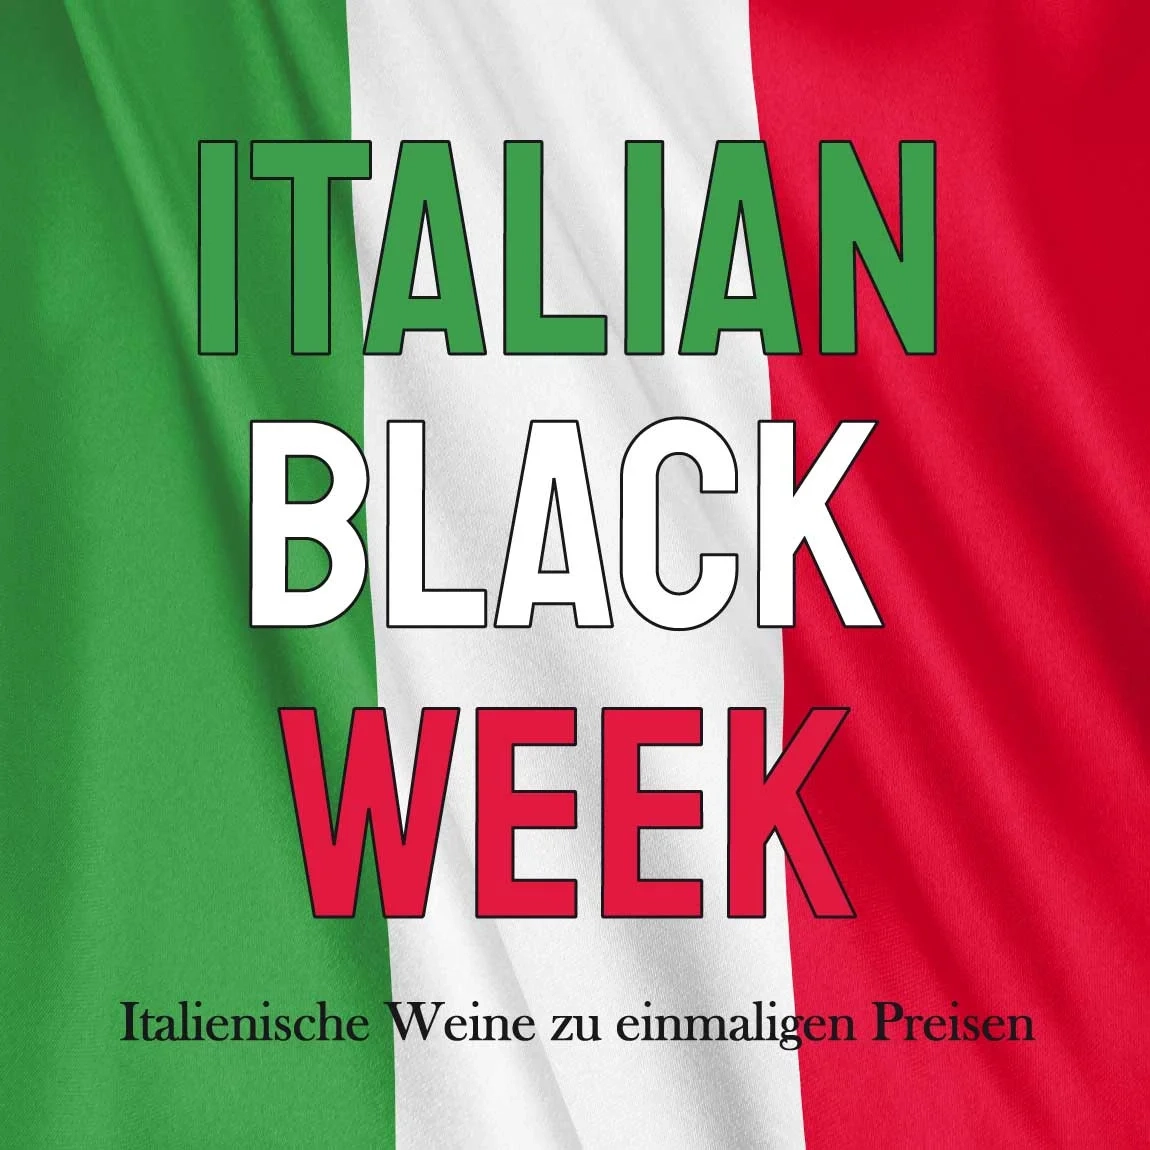 Italian Black Week